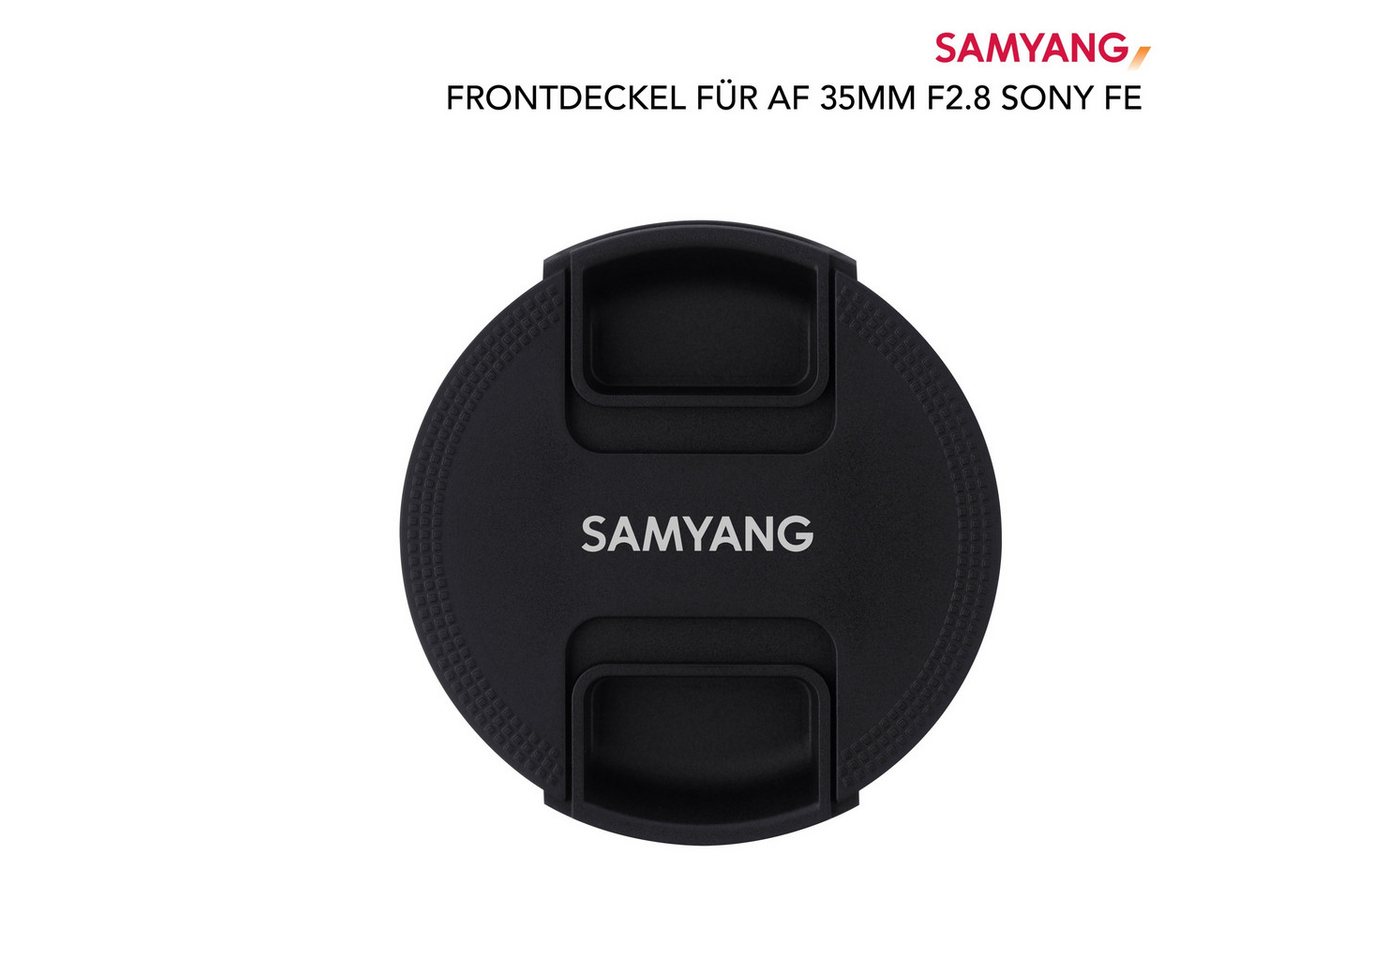 Samyang Frontdeckel für AF 35mm F2,8 Sony FE Objektivzubehör von Samyang